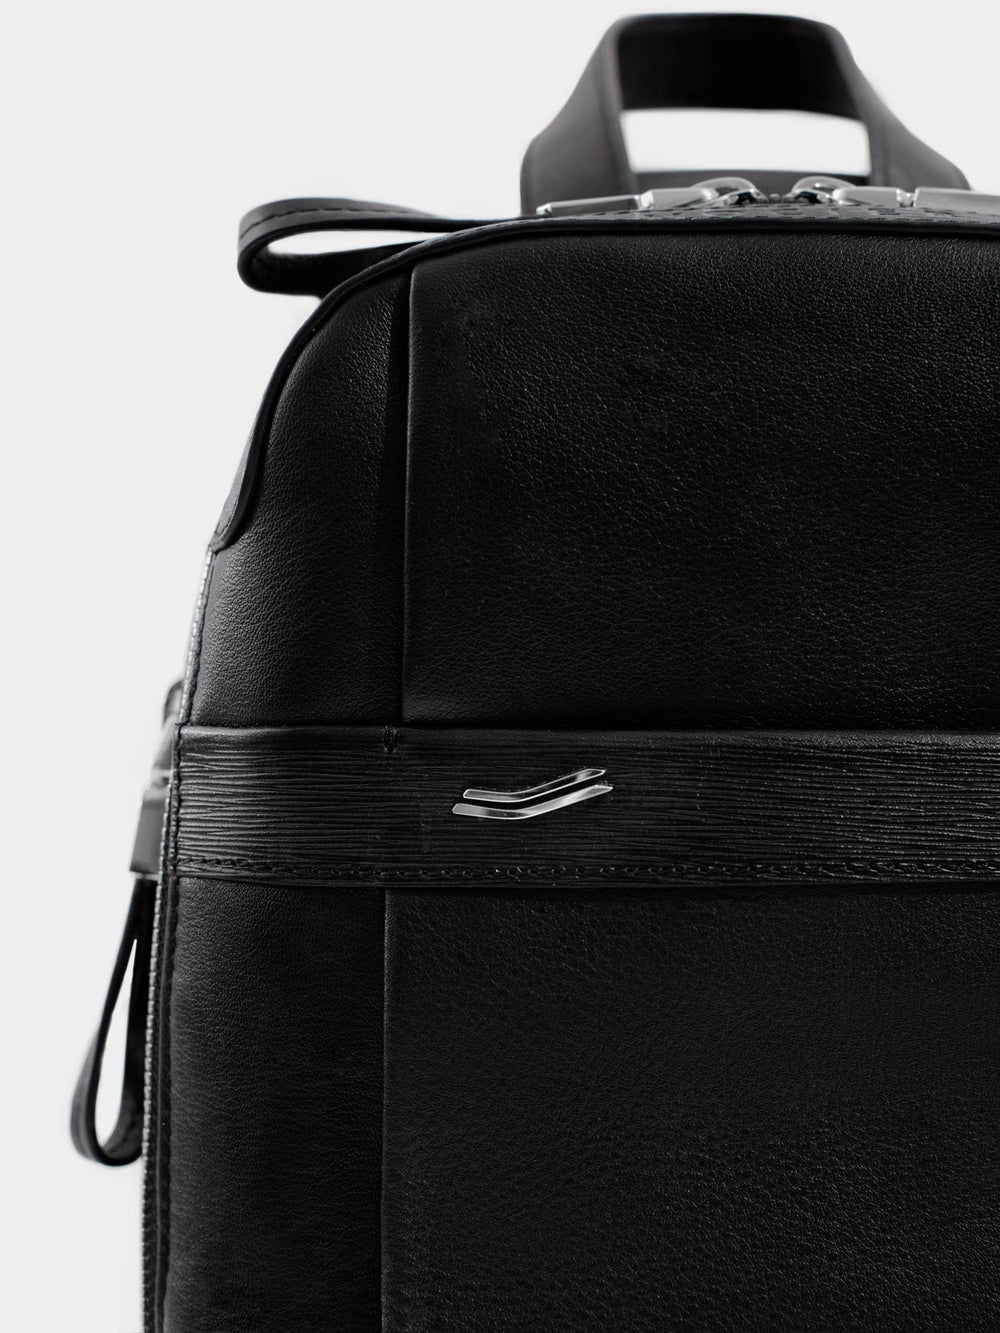 vantage black leather sling bag zipper details front view